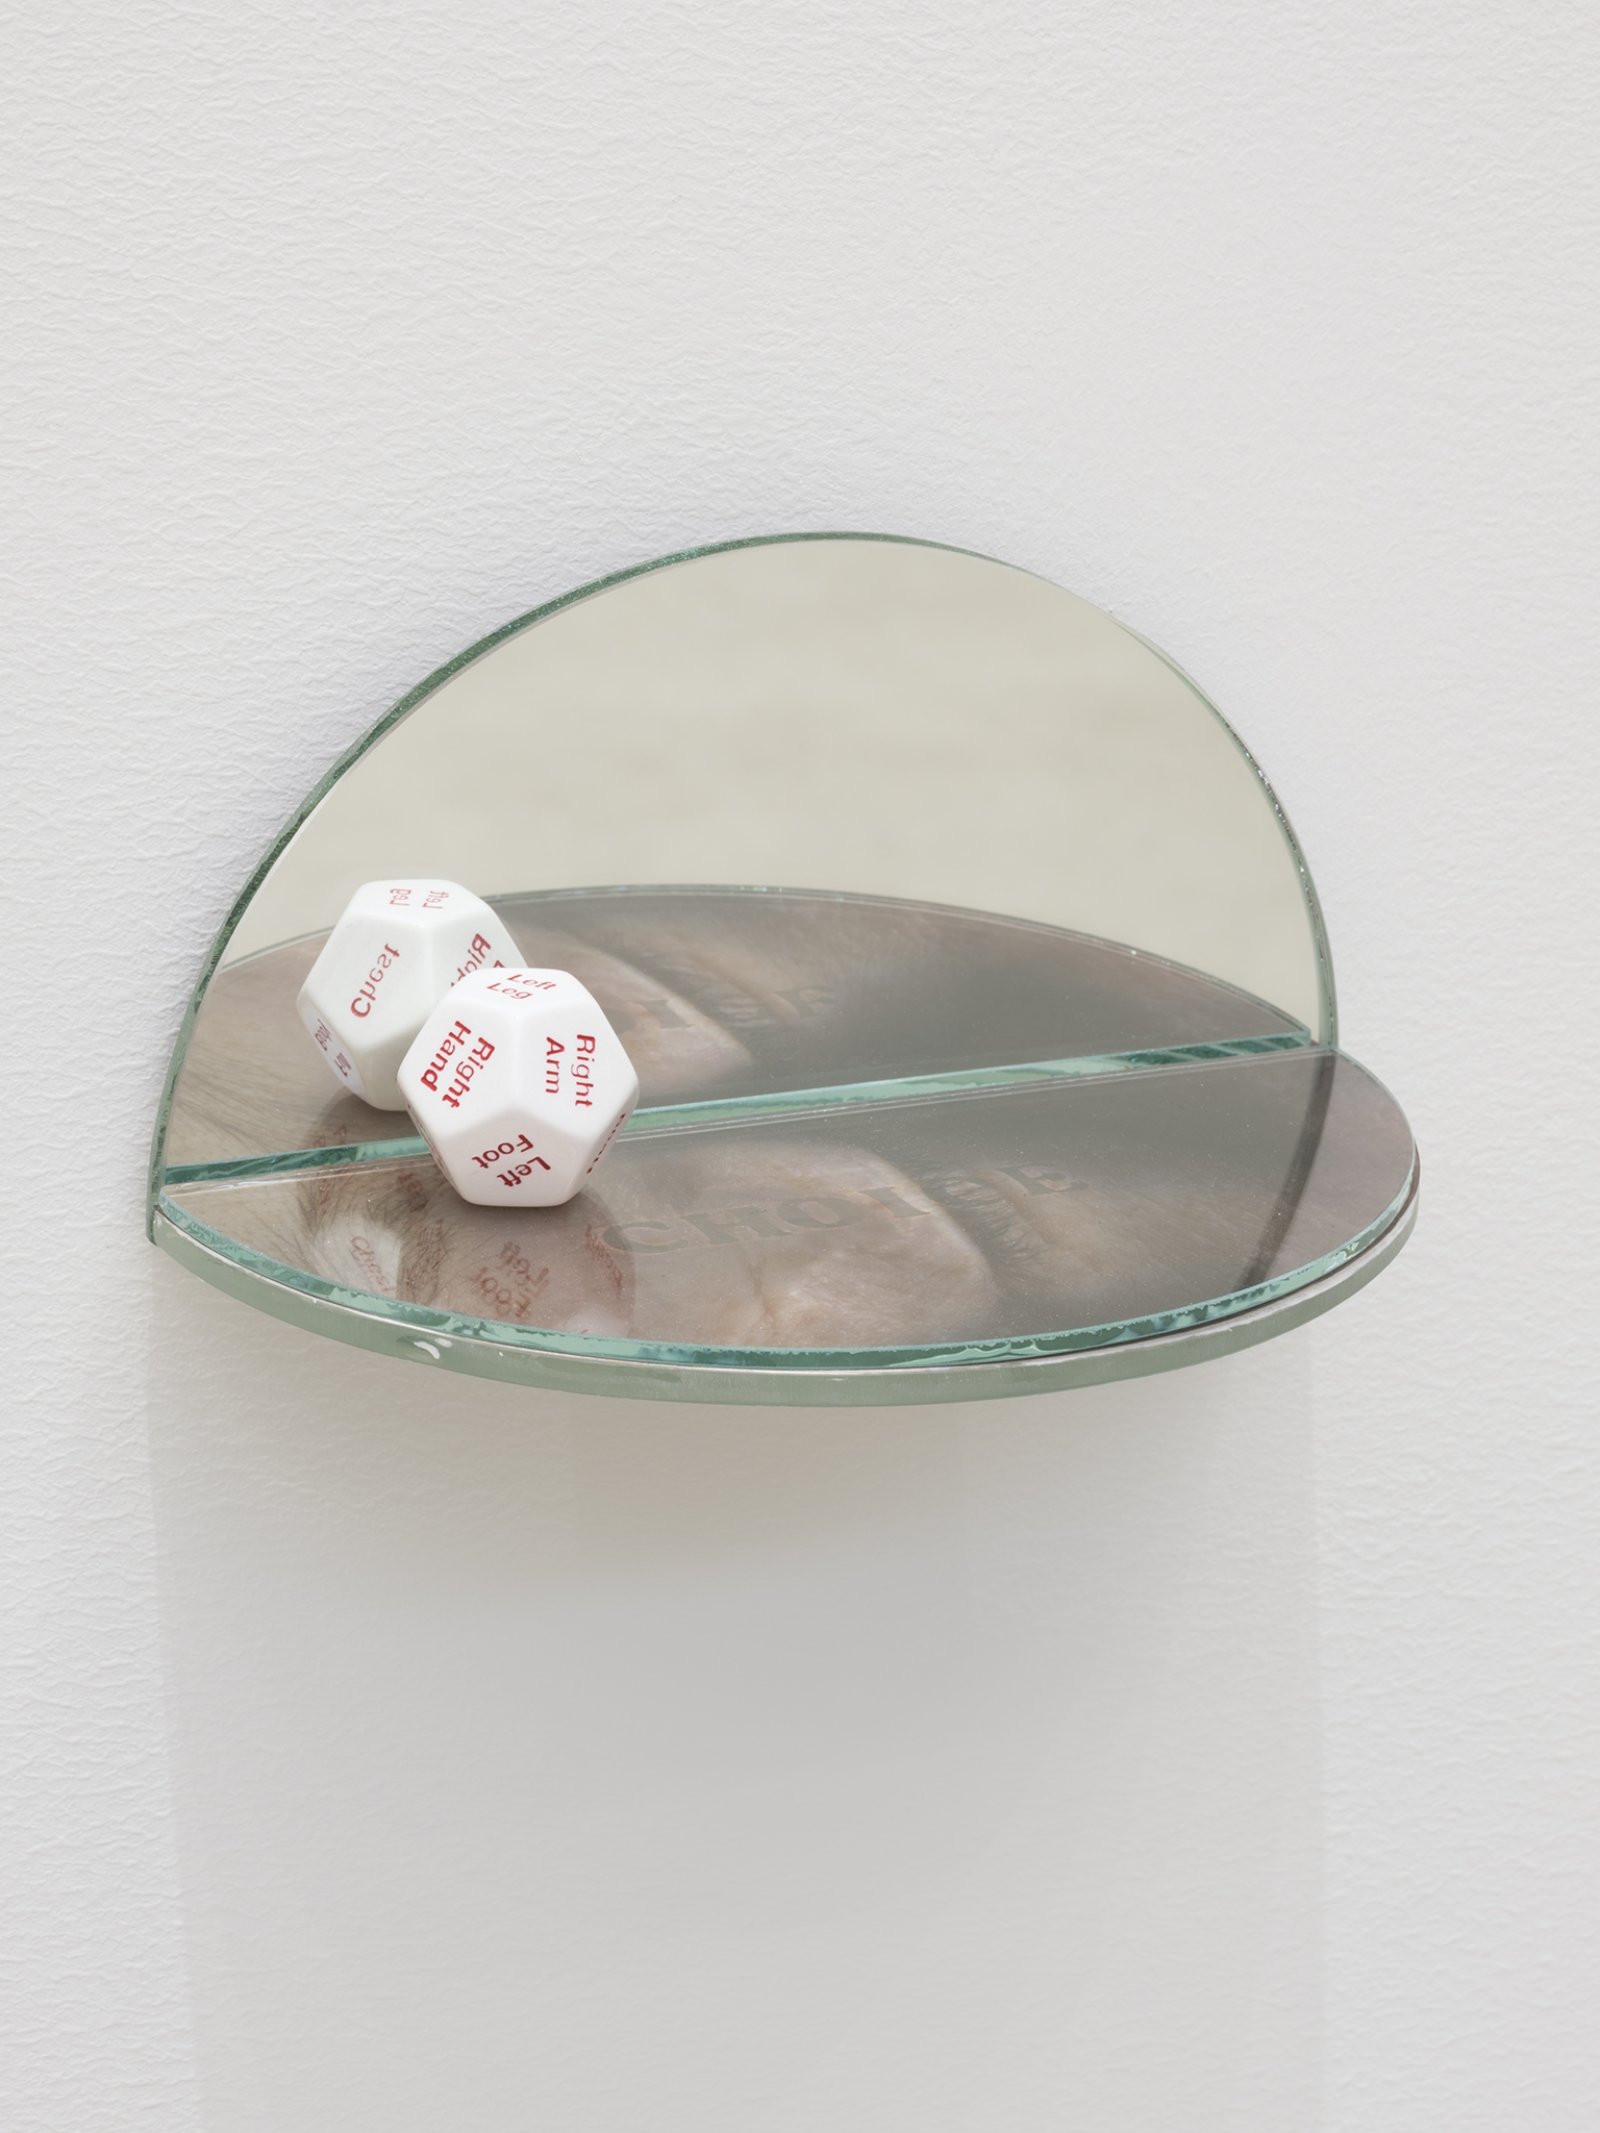 Kasper Feyrer, The Ambidextrous Universe: seeing, 2018, mirror, liquid mirror, glass, fujiclear transparency, 12-sided die, 4 x 4 x 7 in. (9 x 9 x 18 cm)